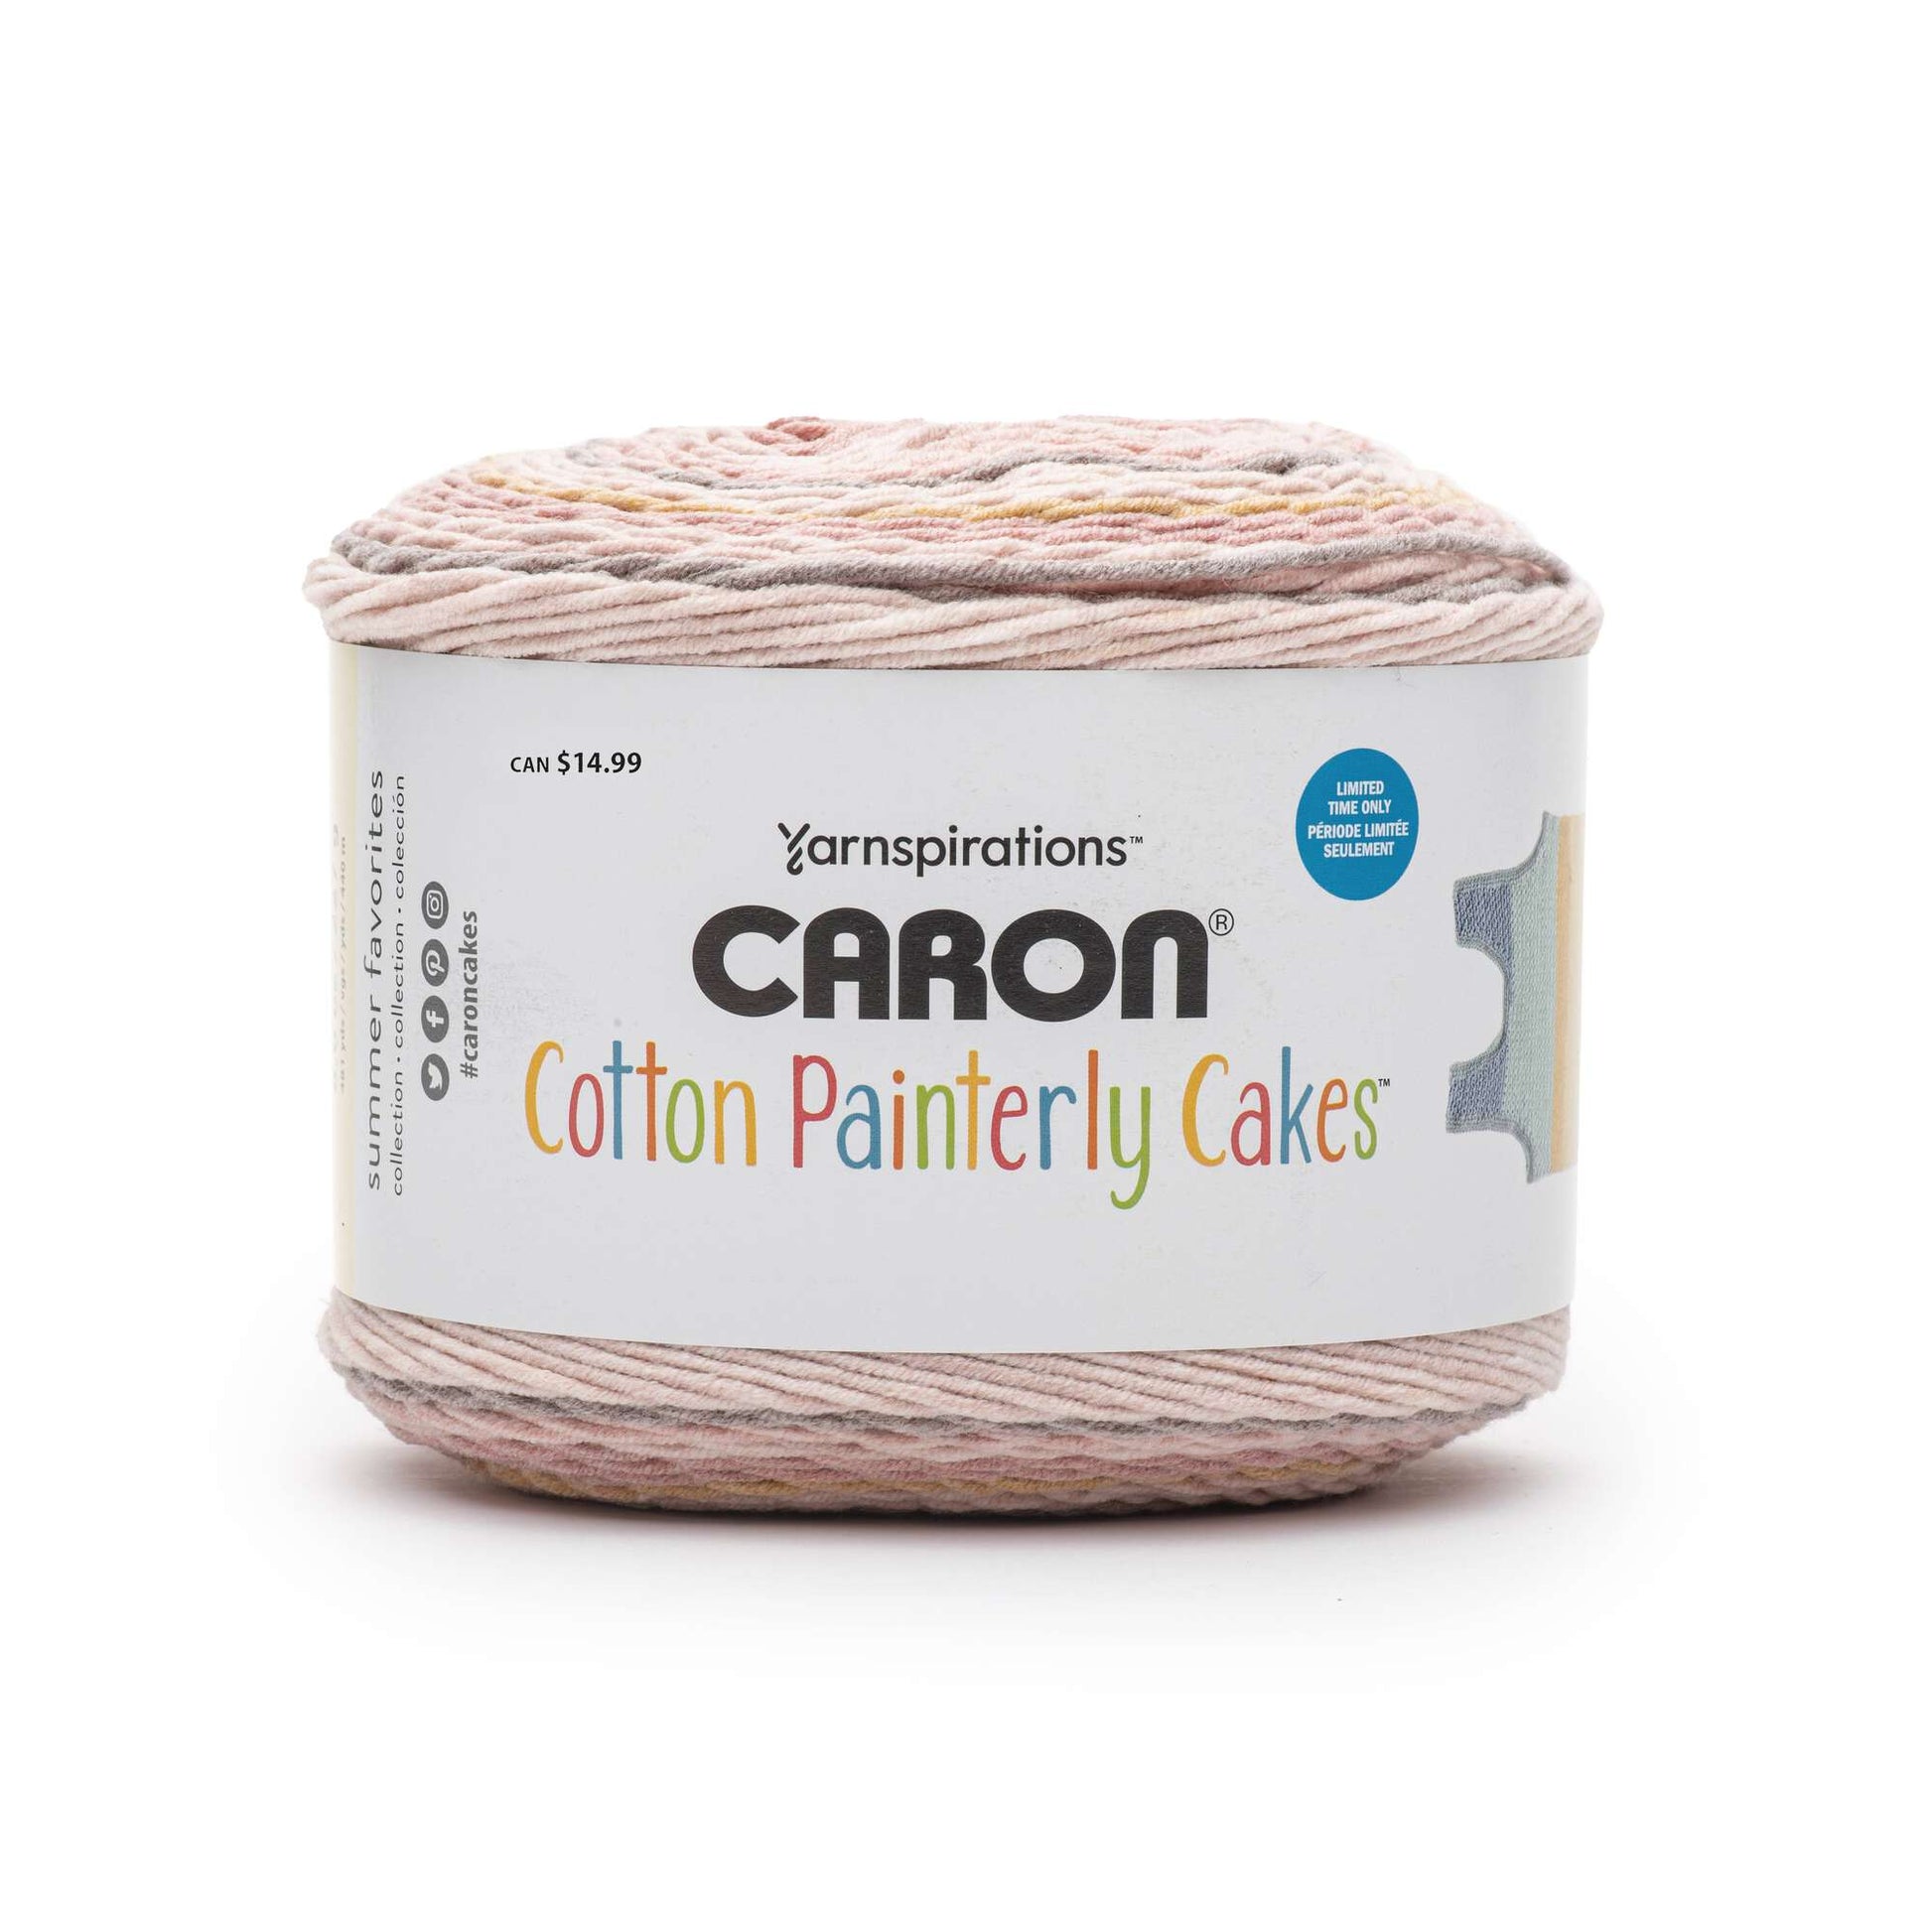 Caron Big Cakes Yarn - Clearance Shades